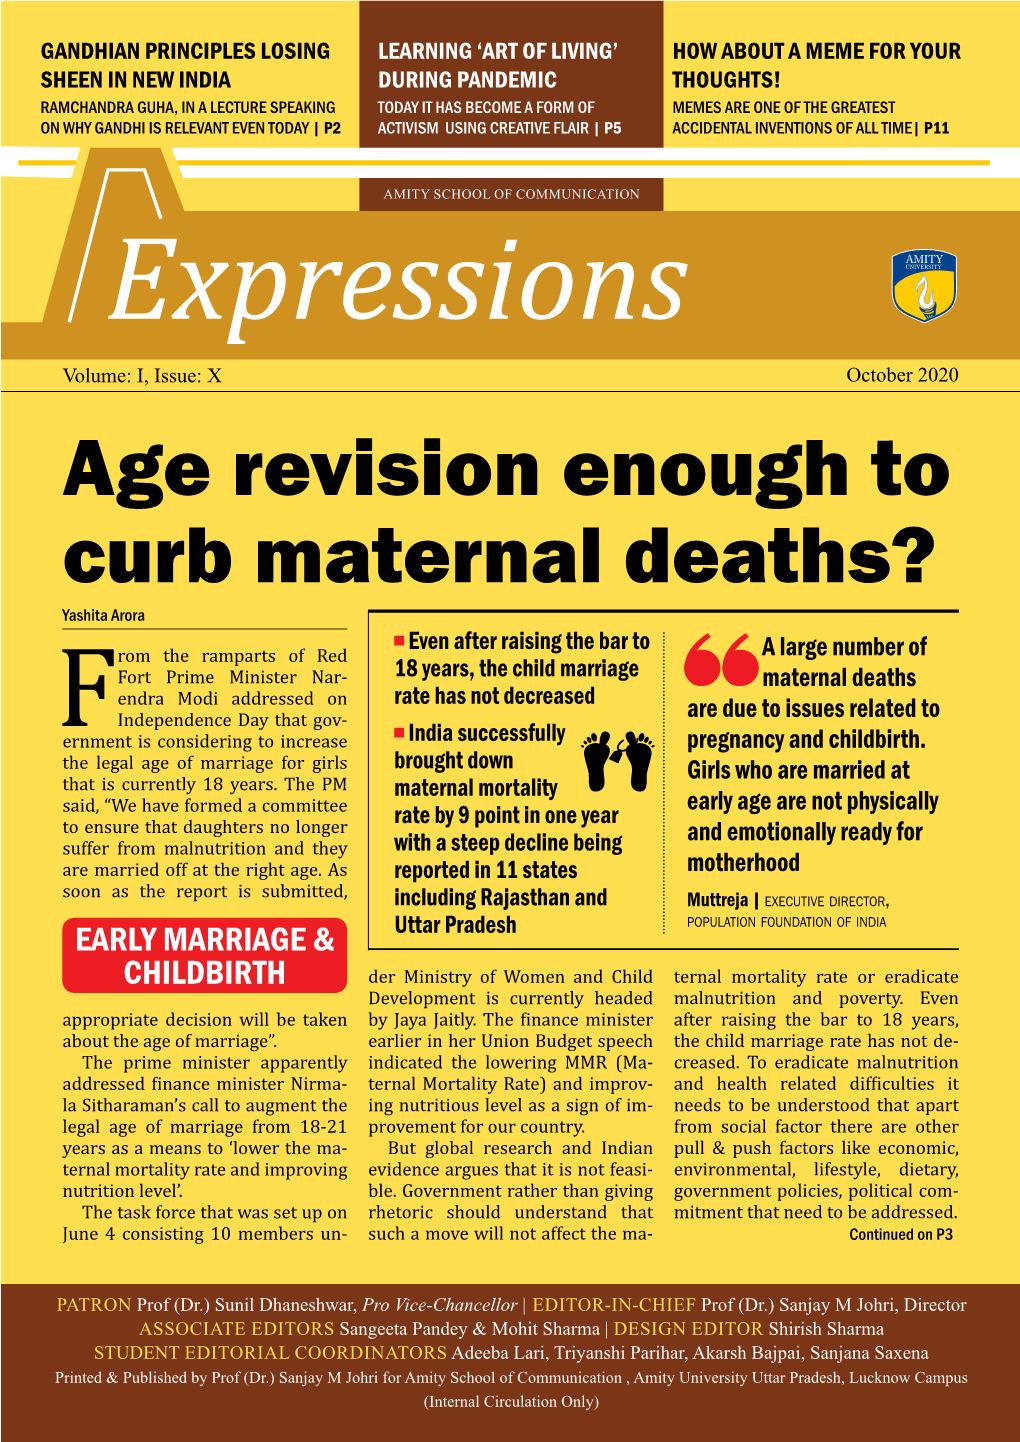 Age Revision Enough to Curb Maternal Deaths? Yashita Arora